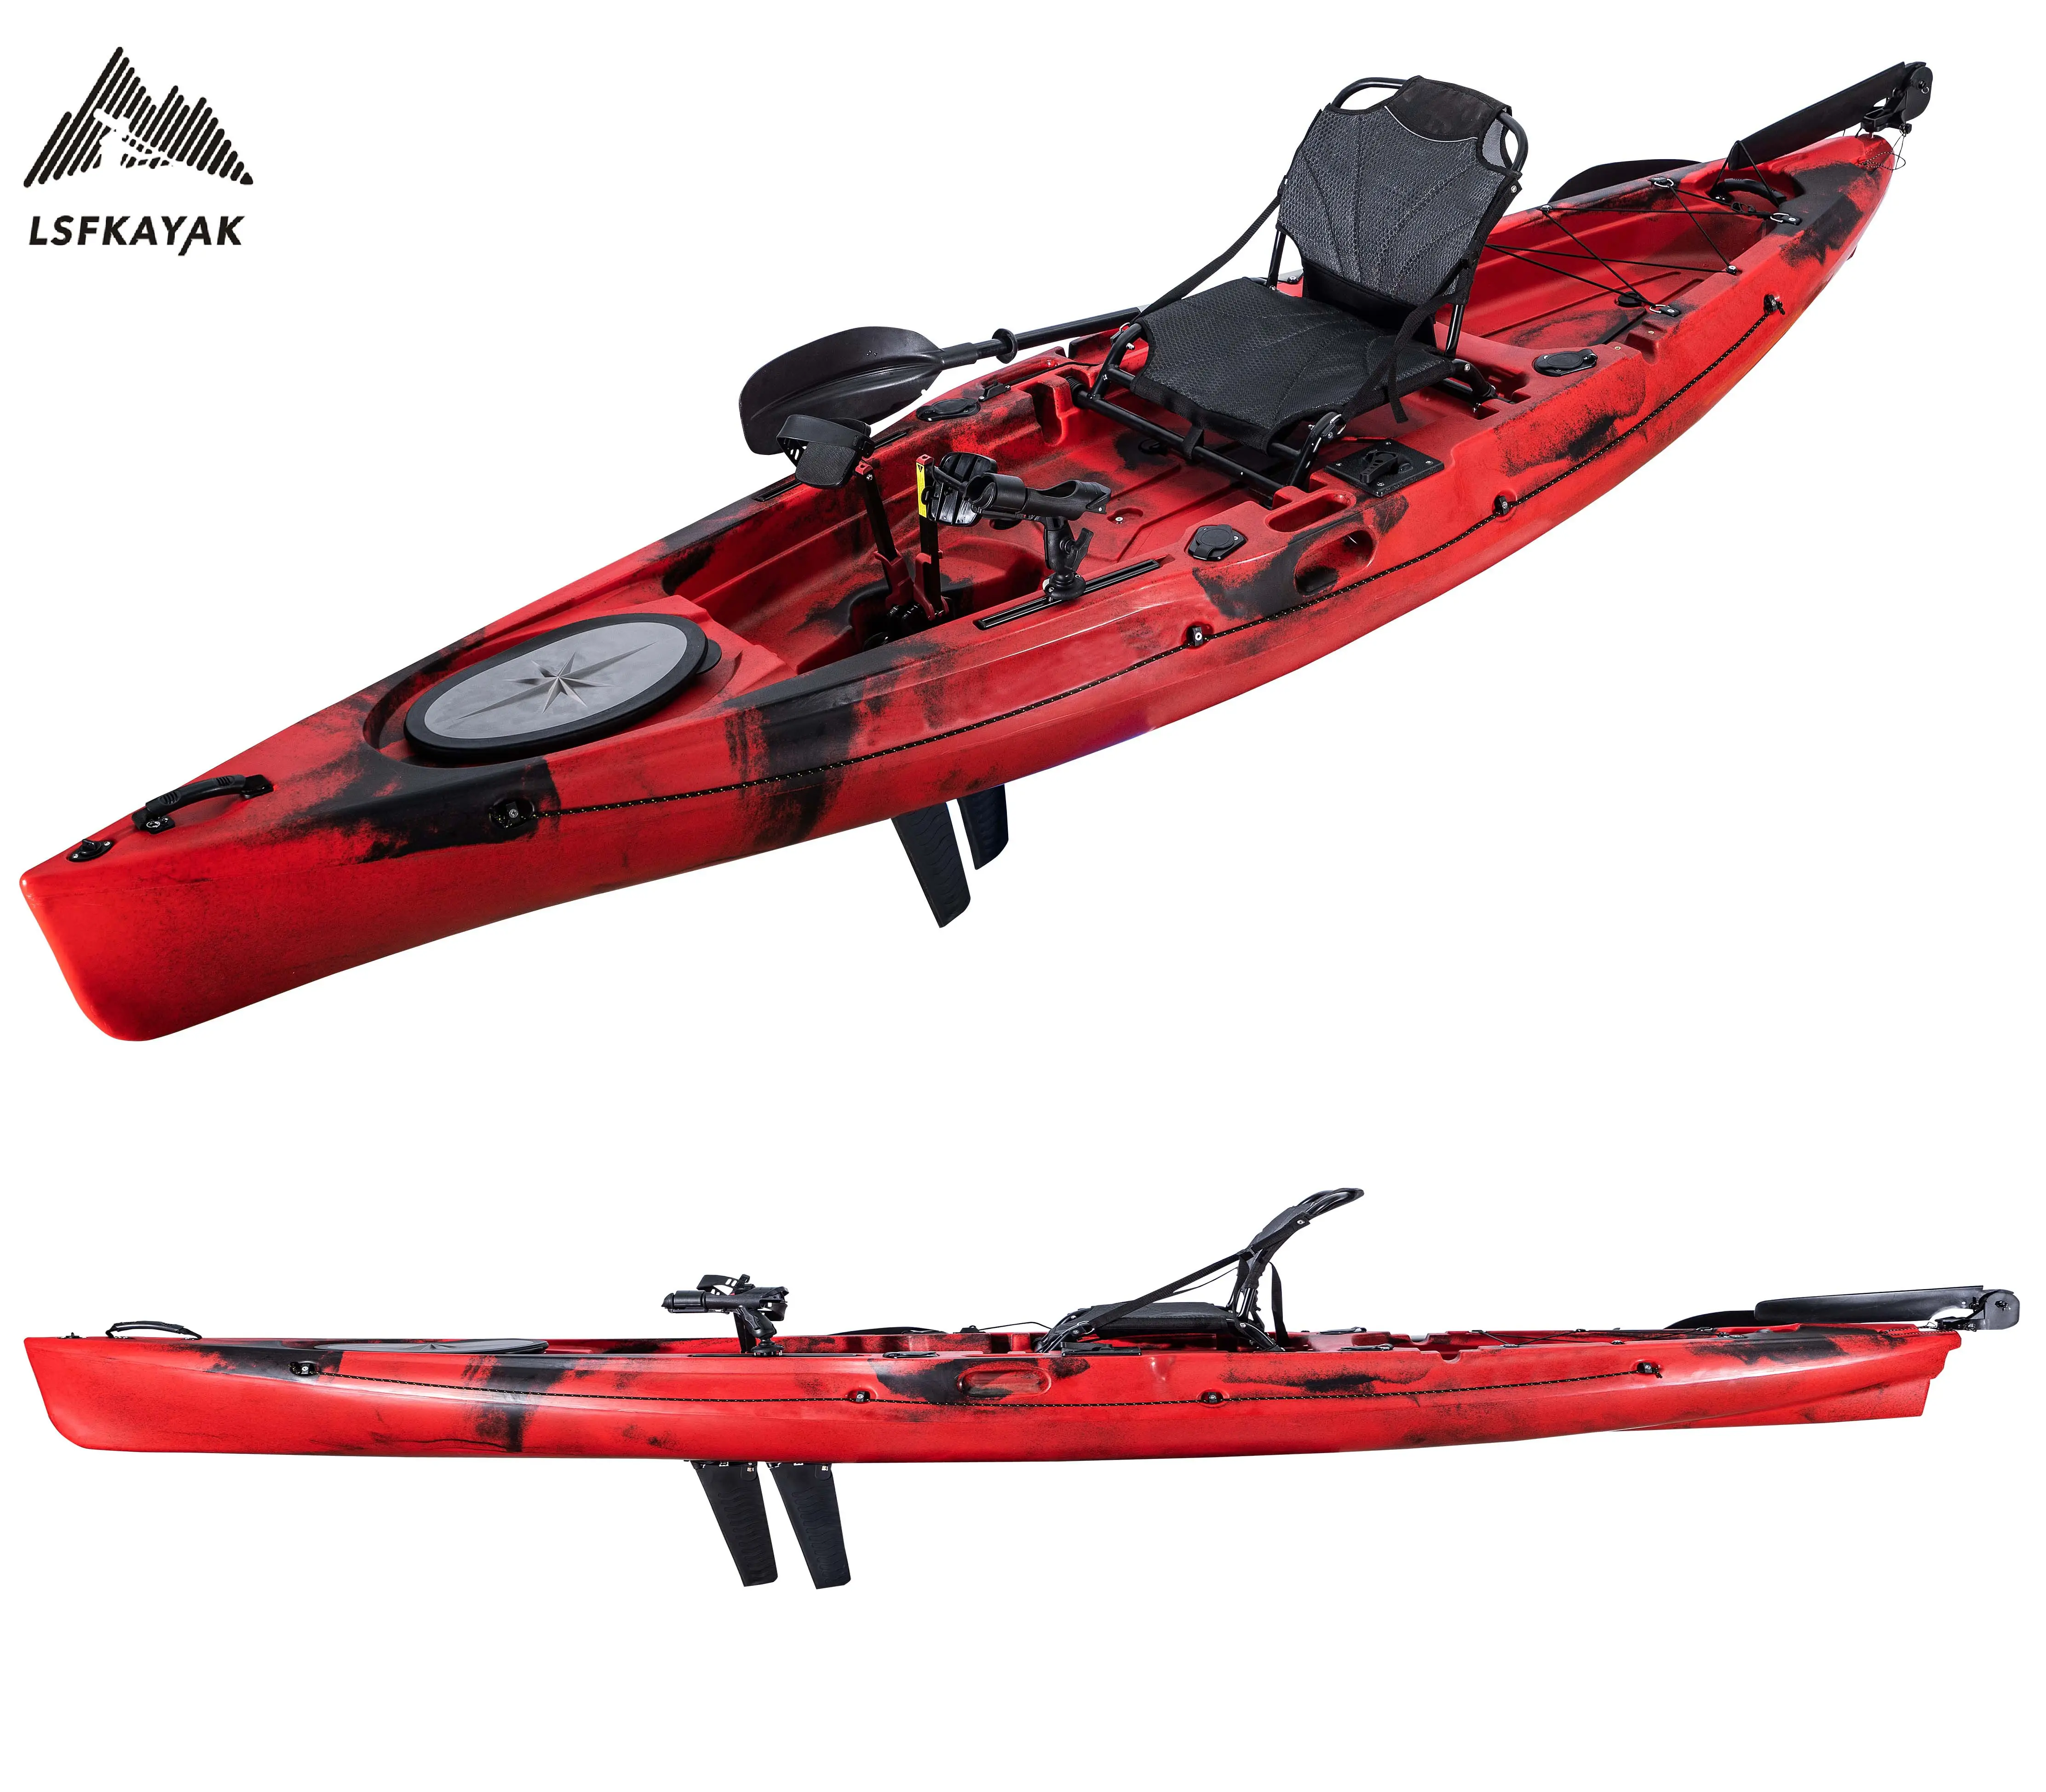 Hot popolare sedile singolo una persona 12ft kayak pedalata kayak vendita per la pesca